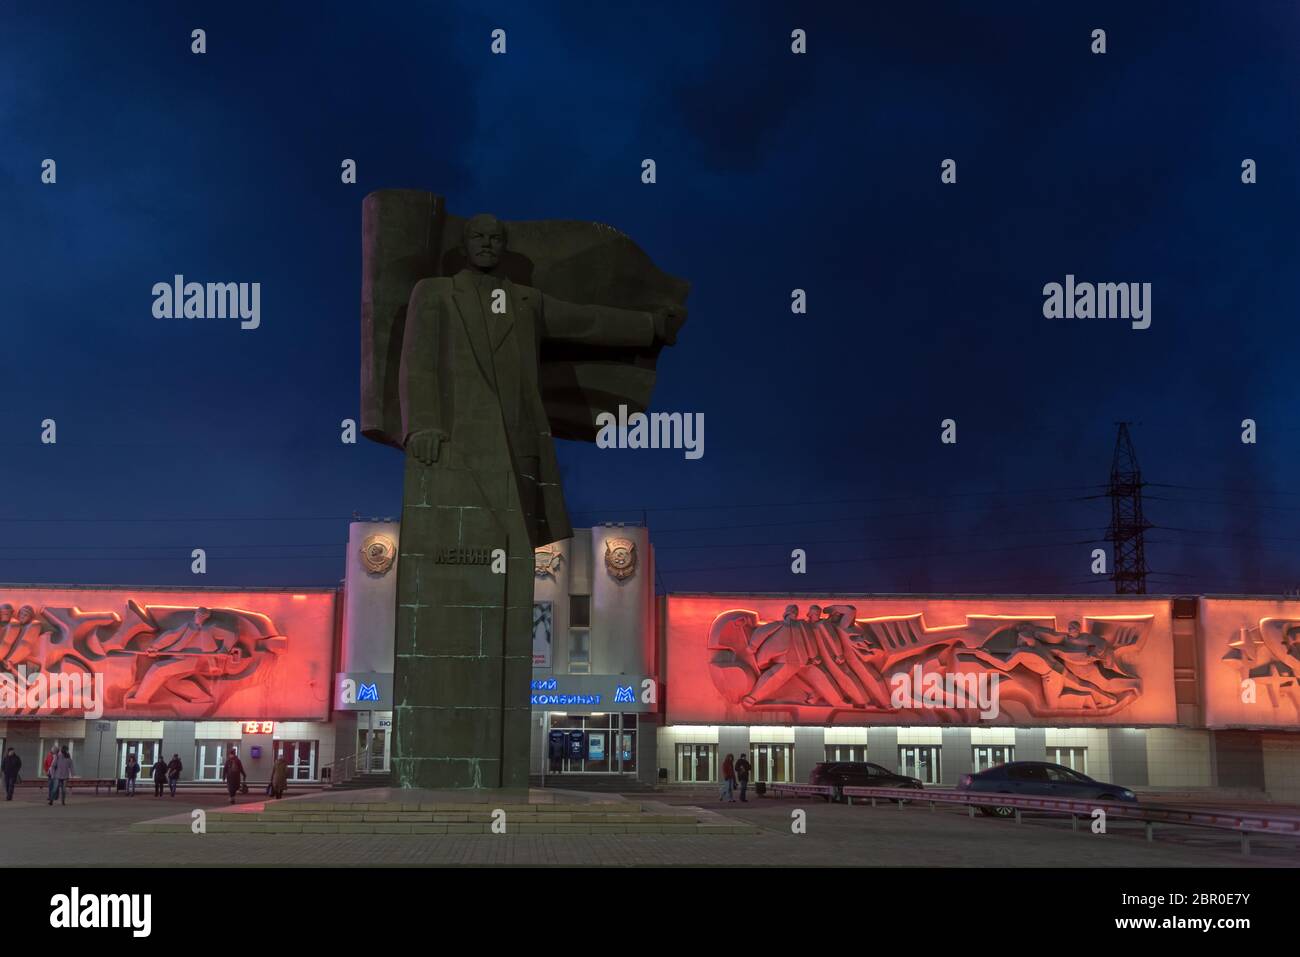 Magnitogorsk, Chelyabinsk Oblast: Monument to Vladimir Lenin in Magnitogorsk. Magnitogorsk Metallurgical Plant (MMK)building Stock Photo